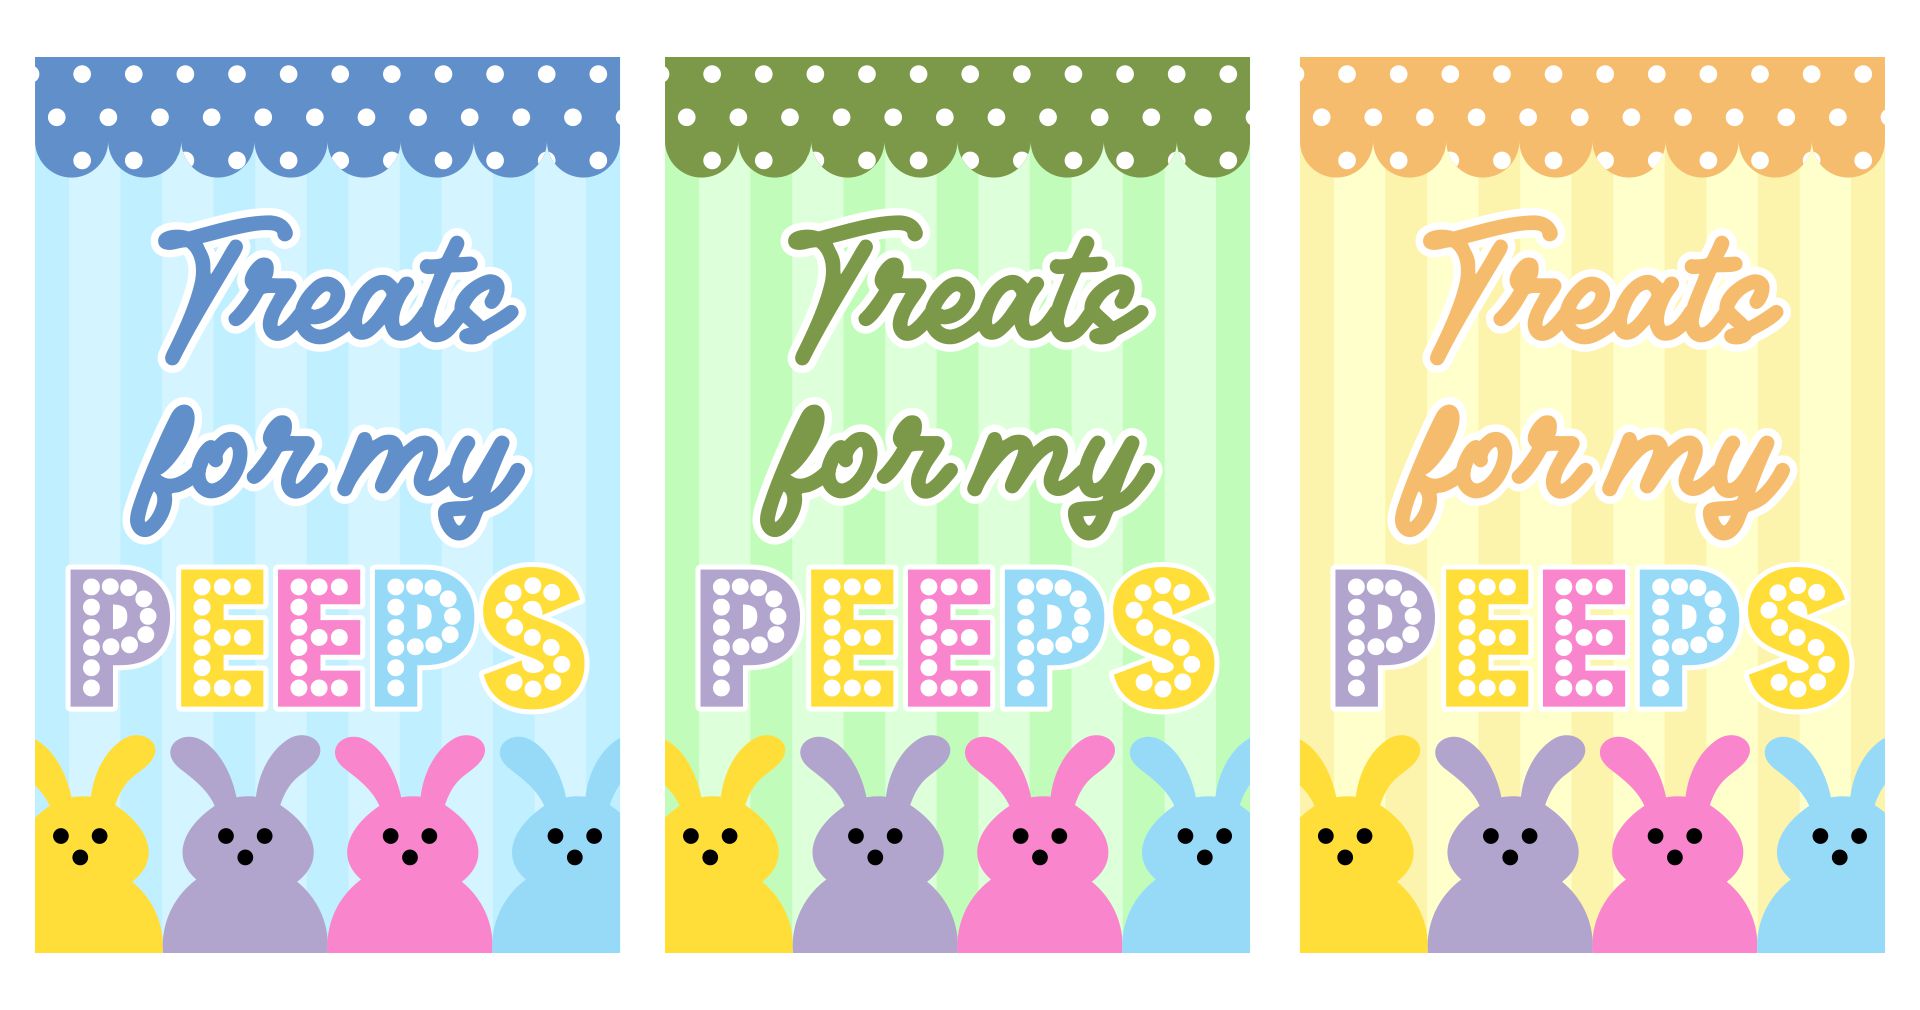 Easter Peeps Printable Tag